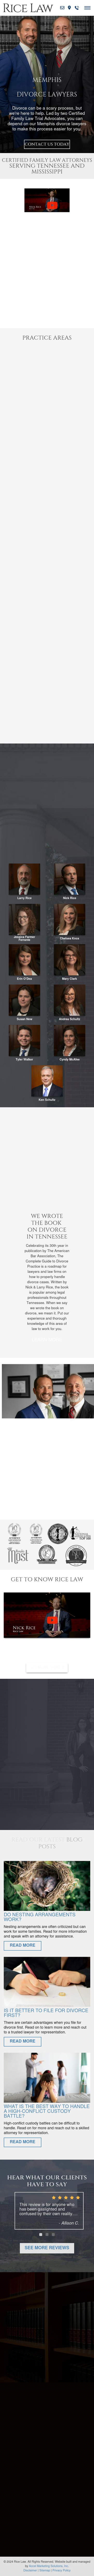 Rice Divorce Team - Memphis TN Lawyers